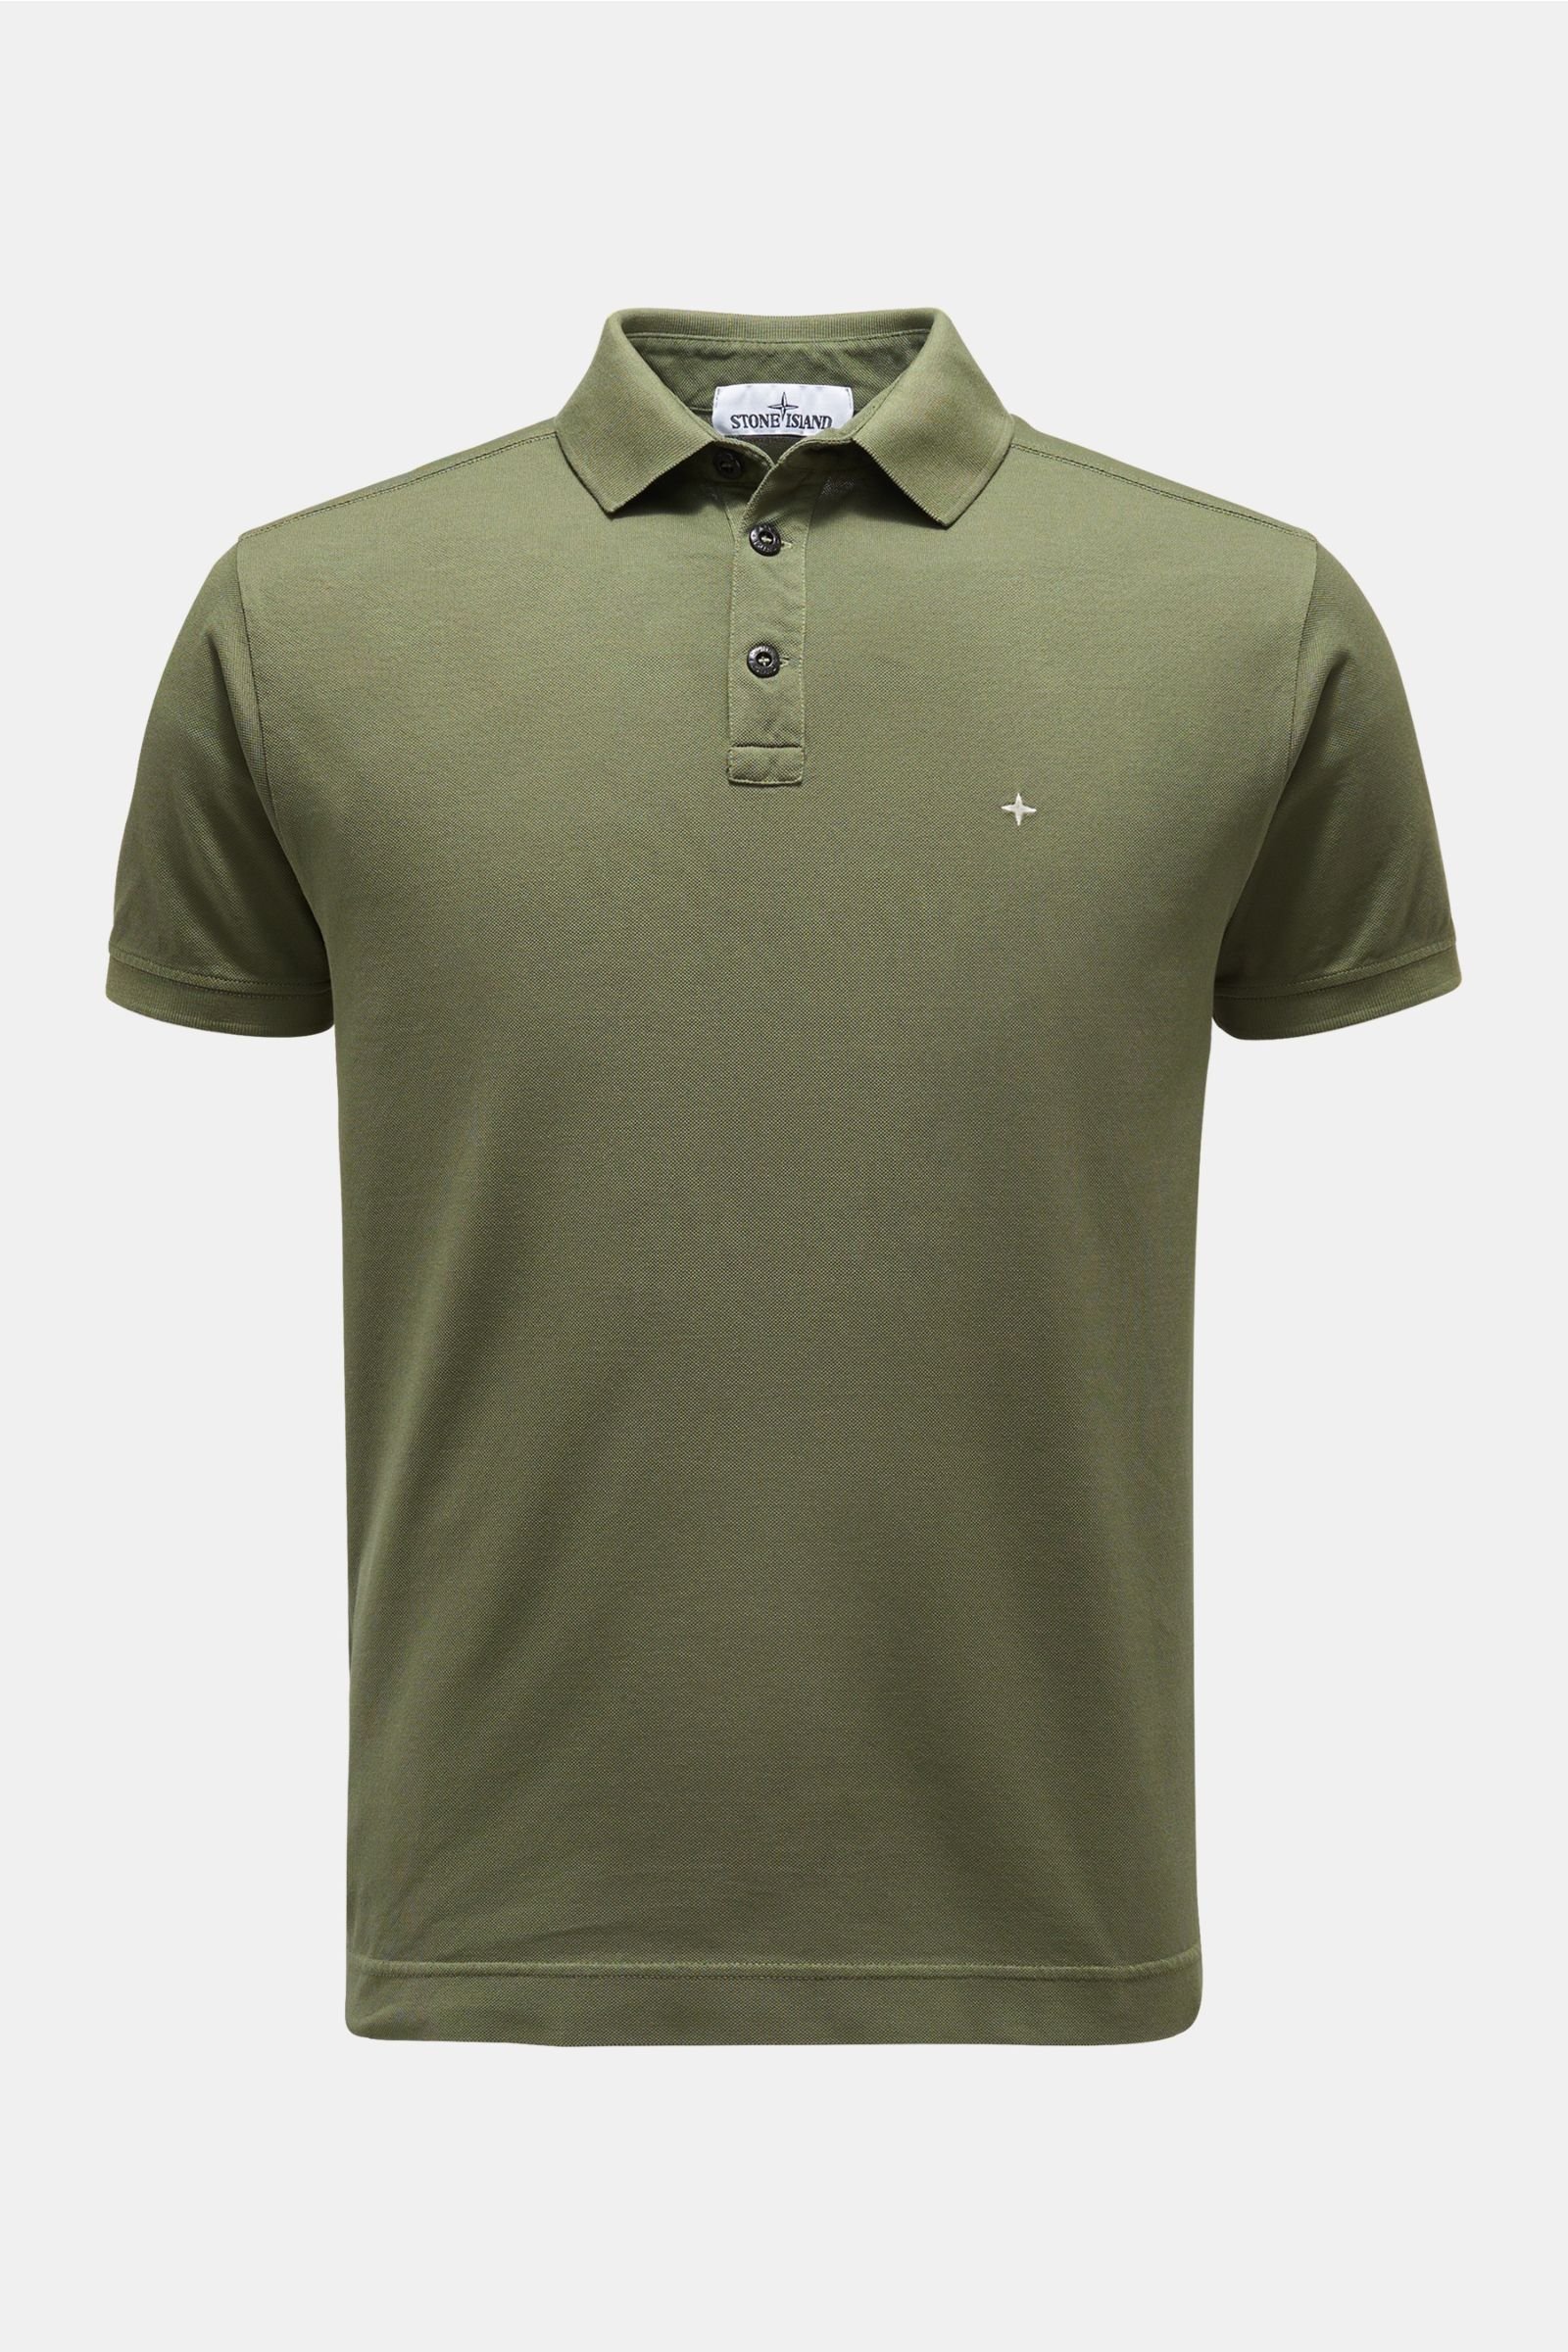 Polo shirt olive